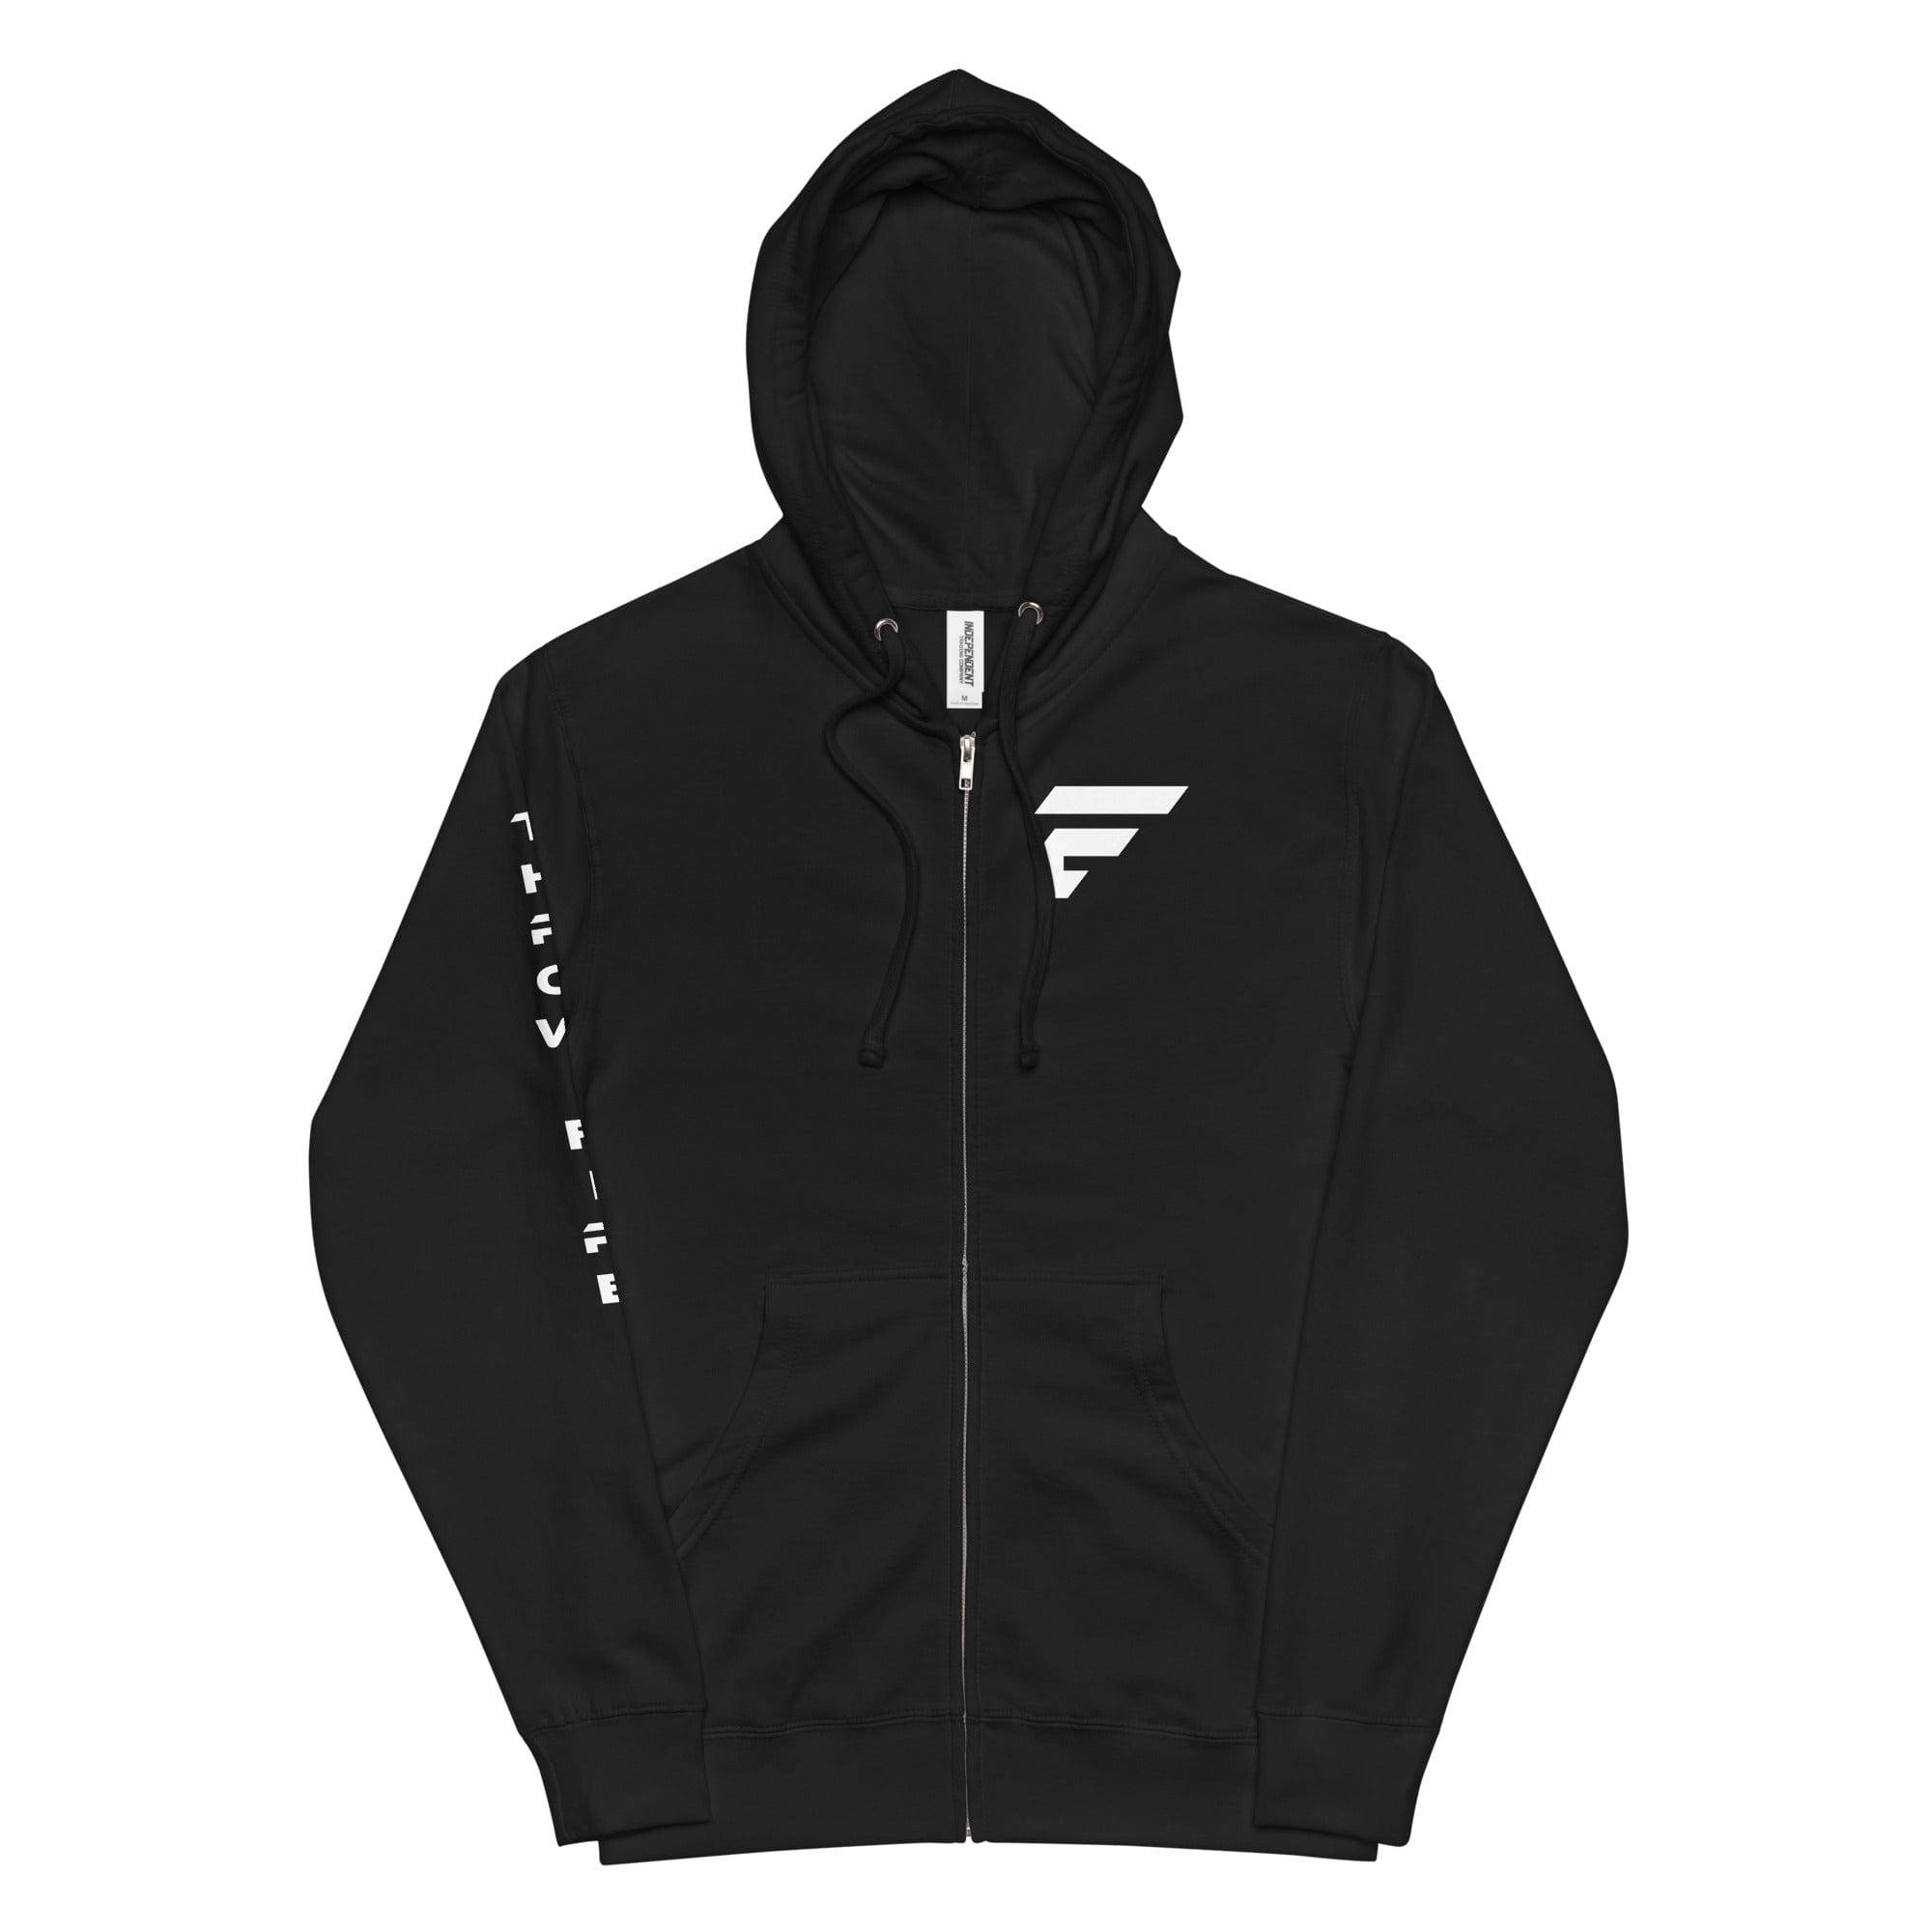 Black unisex fleece zip-up hoodie with Fire Cornhole logo in white